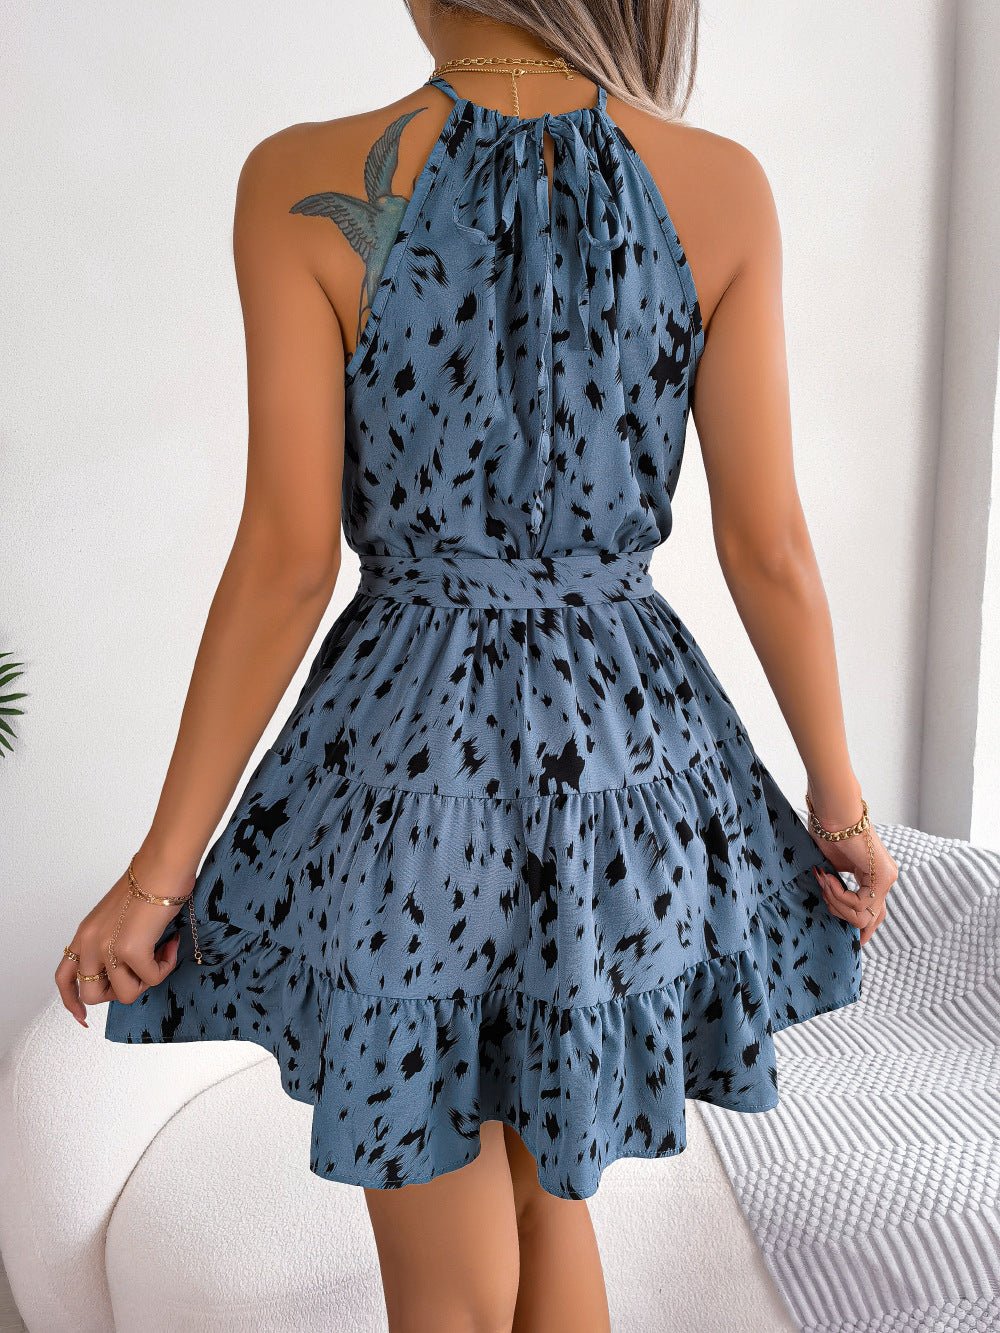 Leopard Print Swing Dress - Summer Ruffles & Beach Style for Women - HalleBeauty